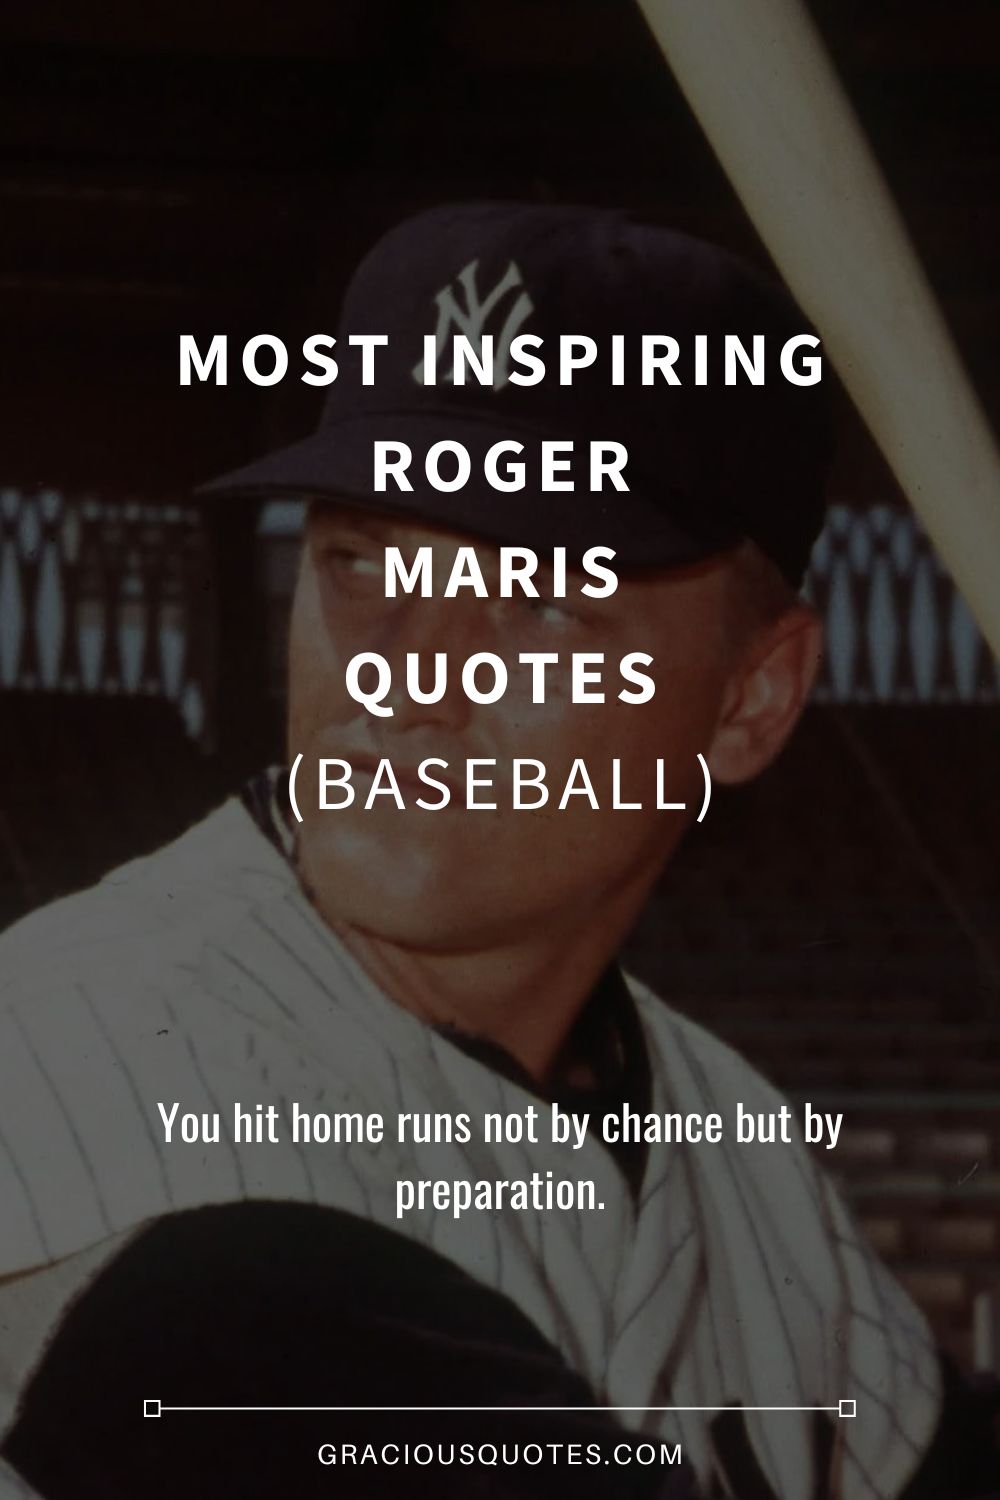 Most Inspiring Roger Maris Quotes (BASEBALL) - Gracious Quotes